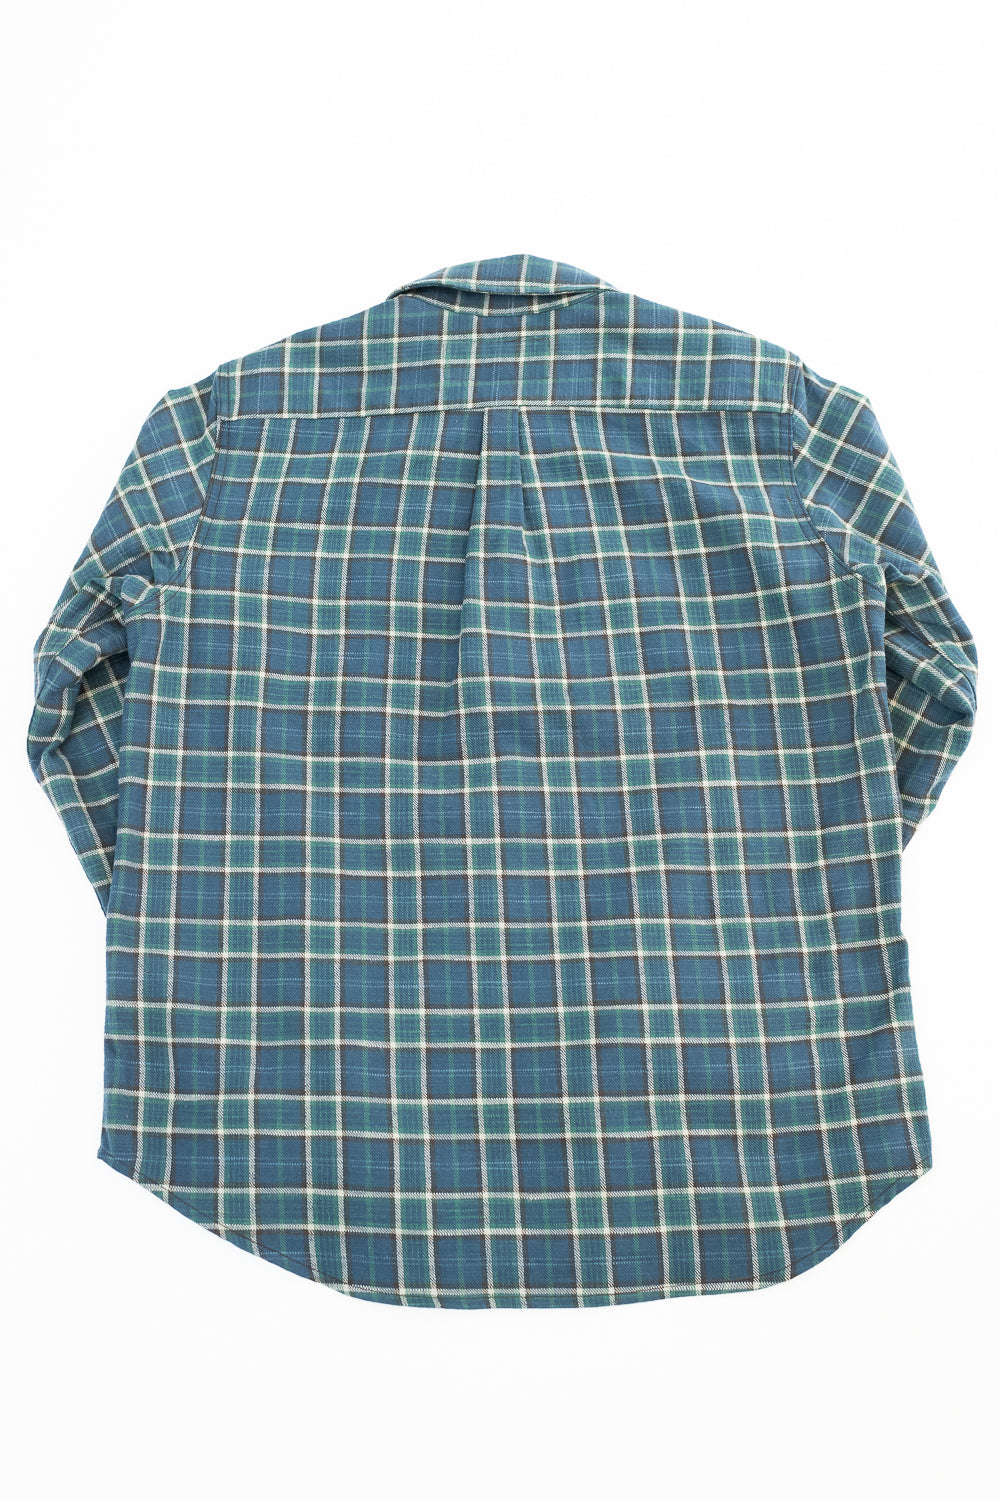 Jumper Shirt Vintage Slub Plaid  - Blue